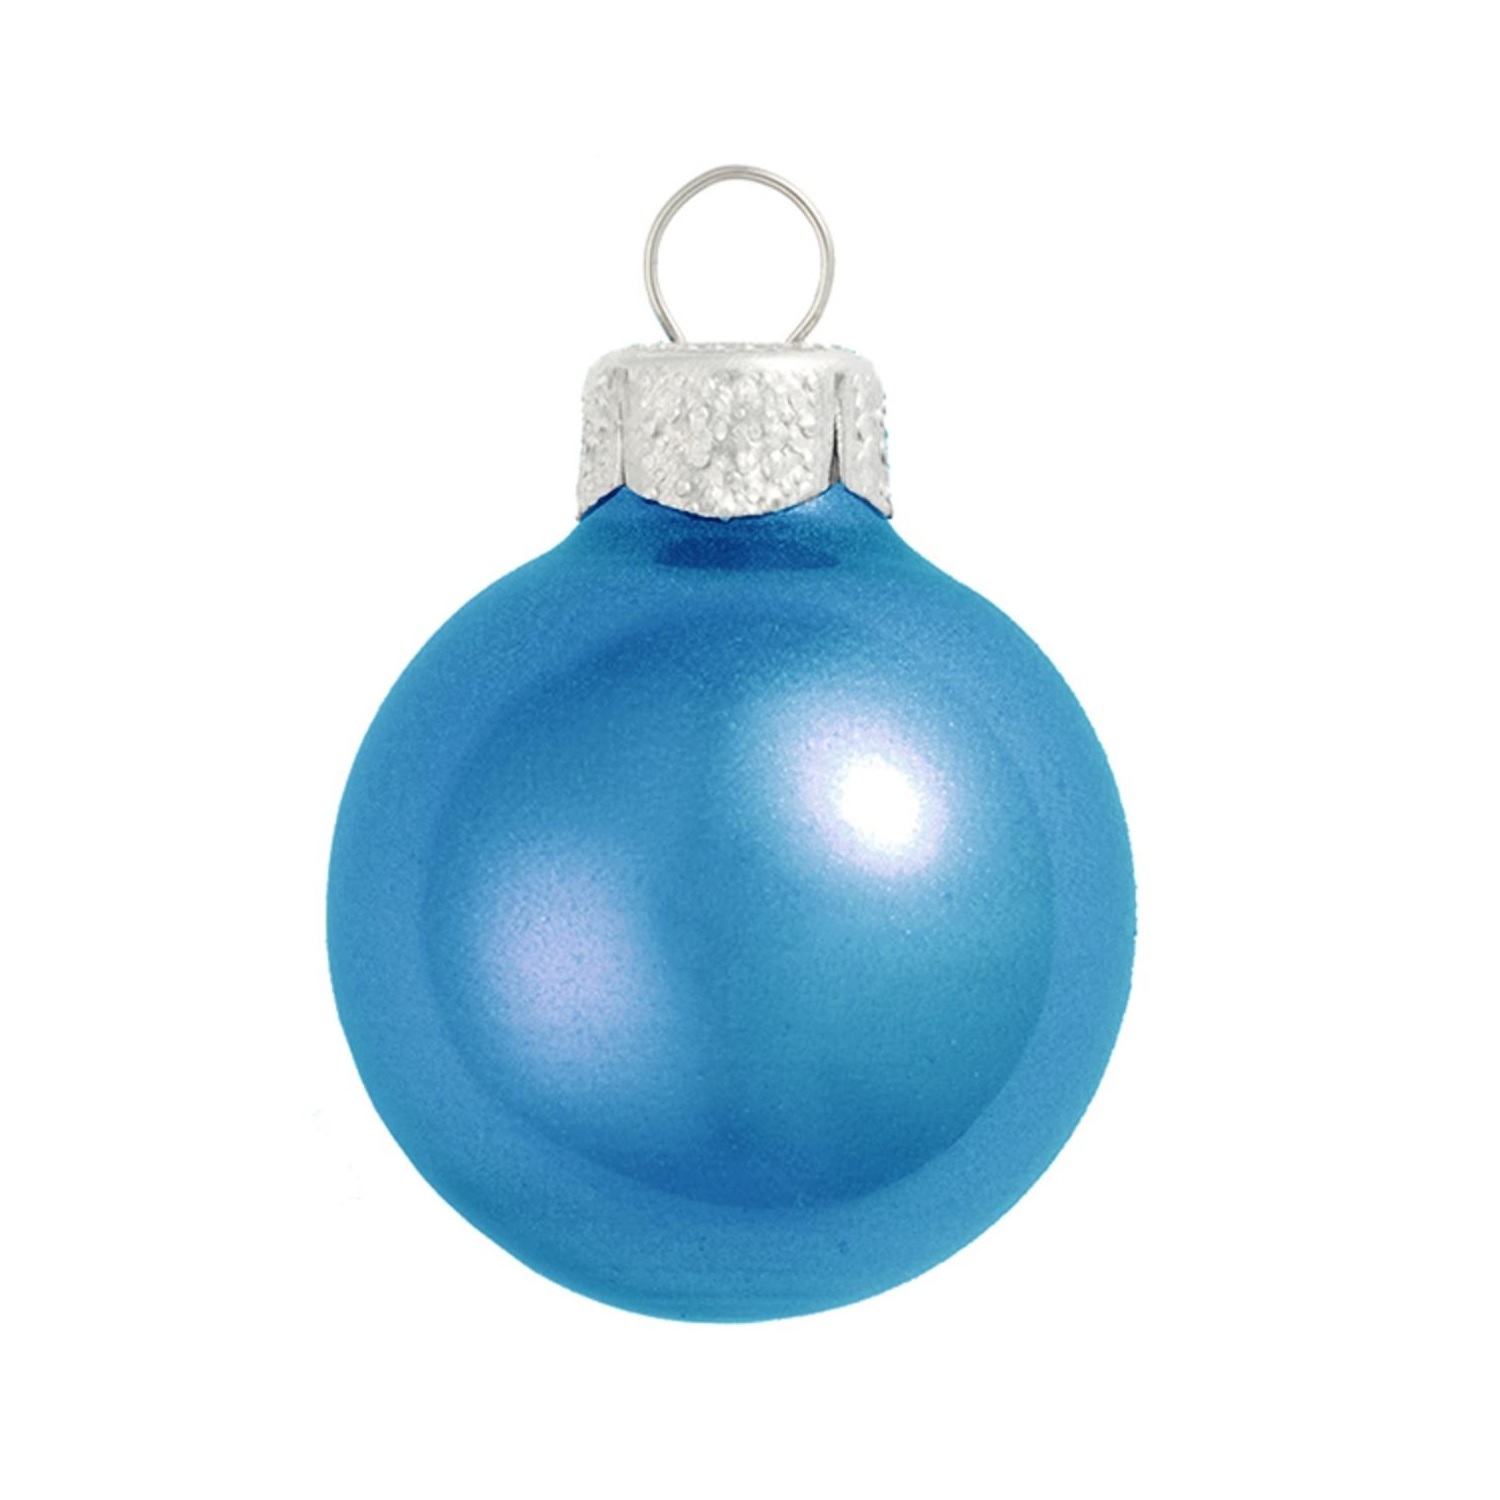 Whitehurst Pearl Finish Glass Christmas Ball Ornaments - 1.5" (40mm) - Blue - 40ct